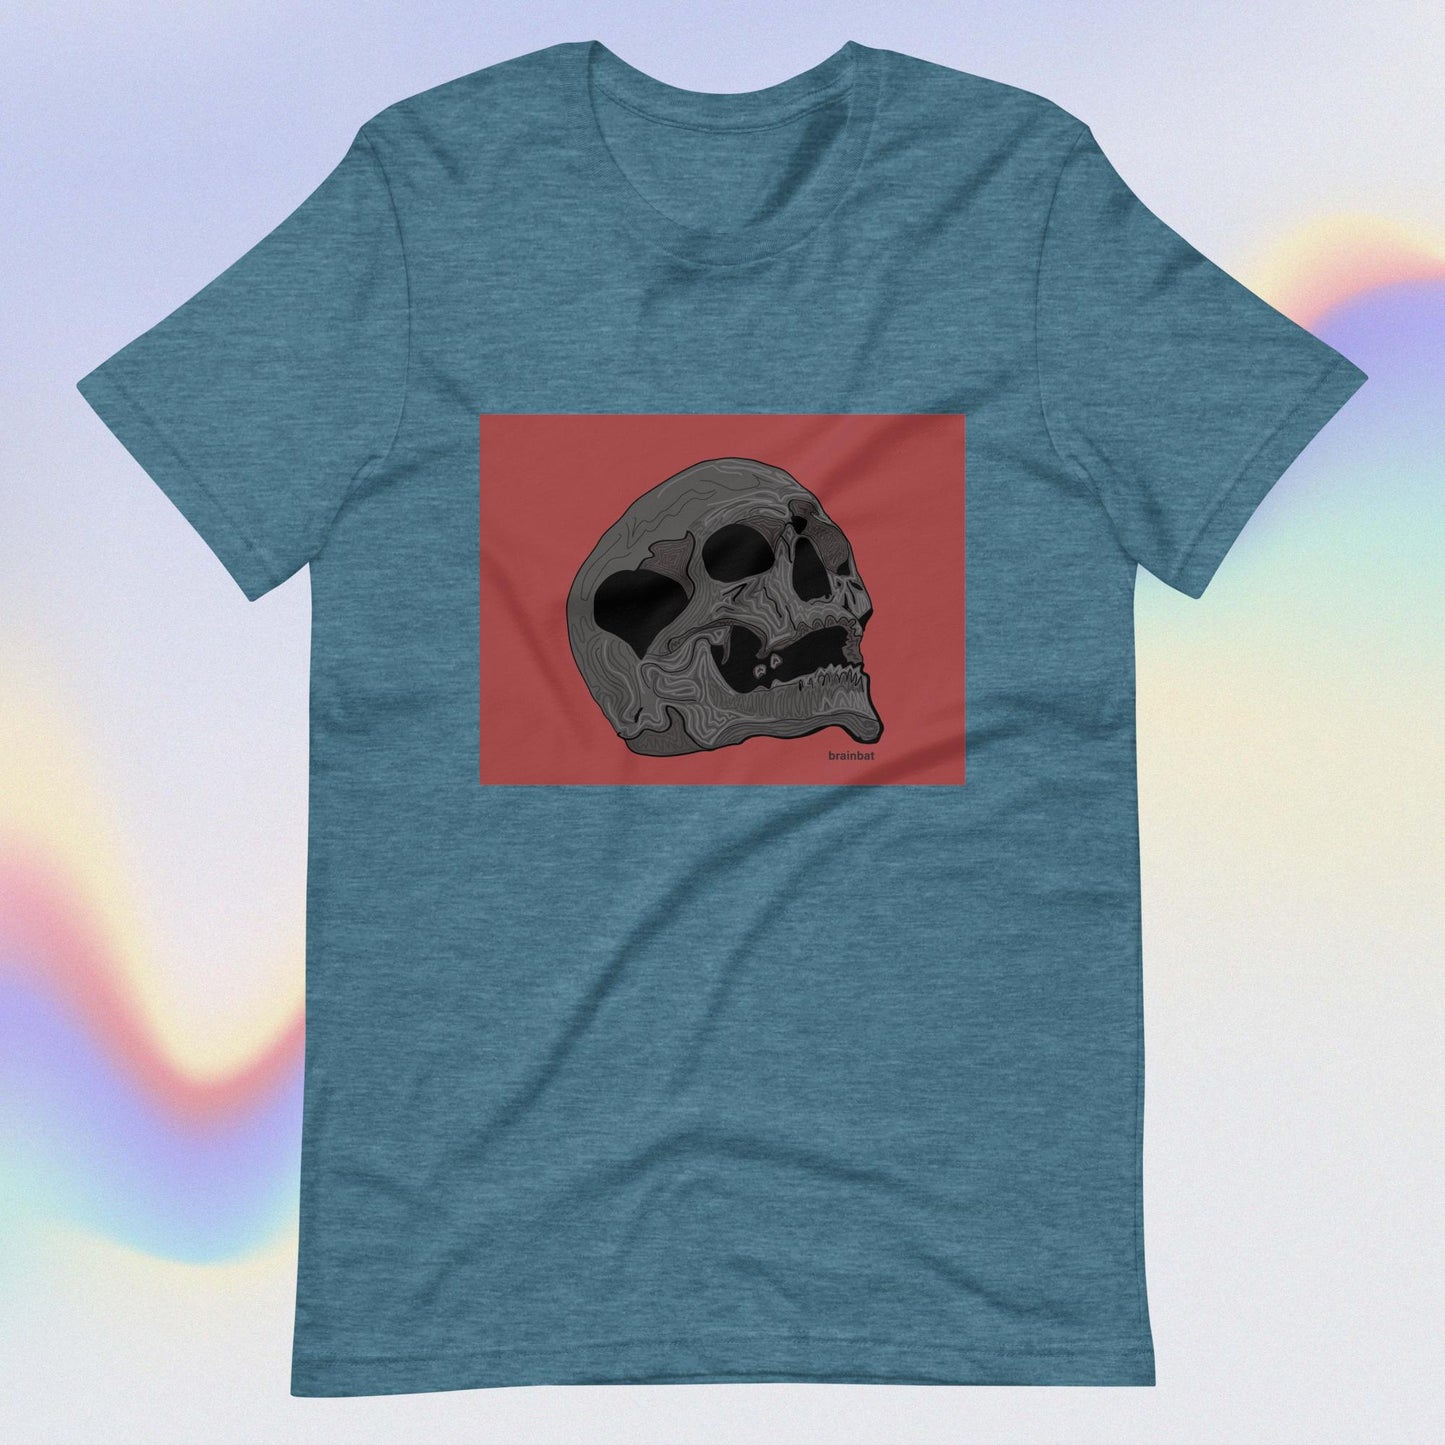 Skull T-shirt by Brainbat